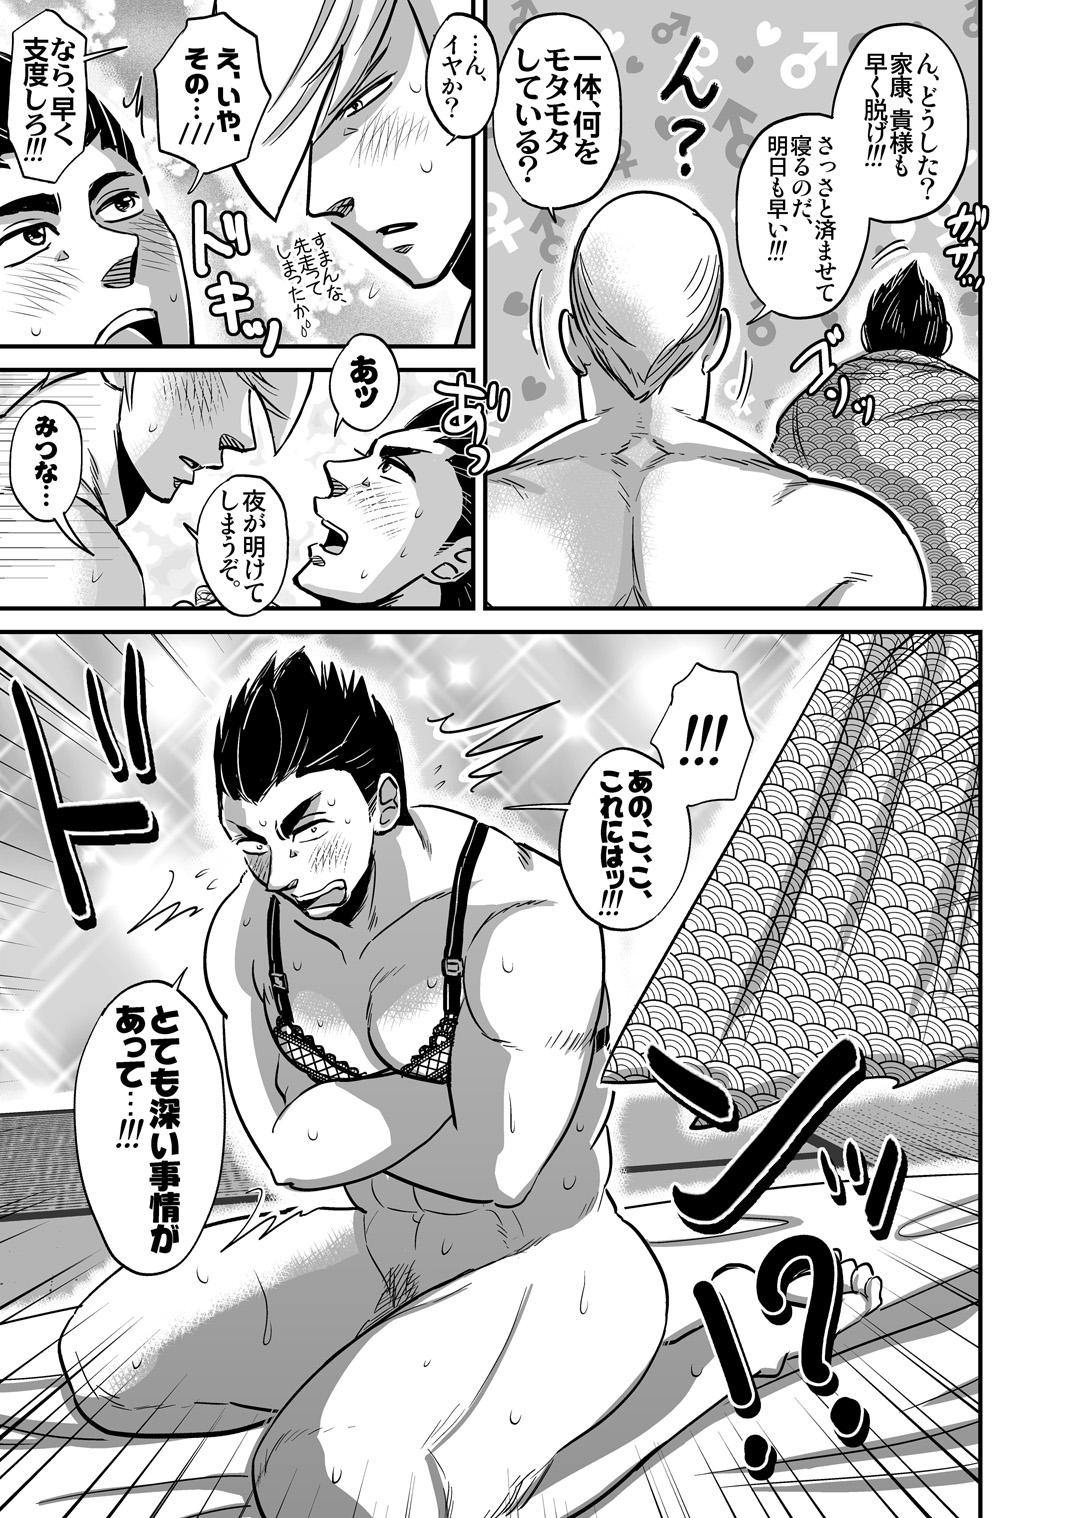 Cdmx Multi-HOMO manga at home - Sengoku basara Ssbbw - Page 6